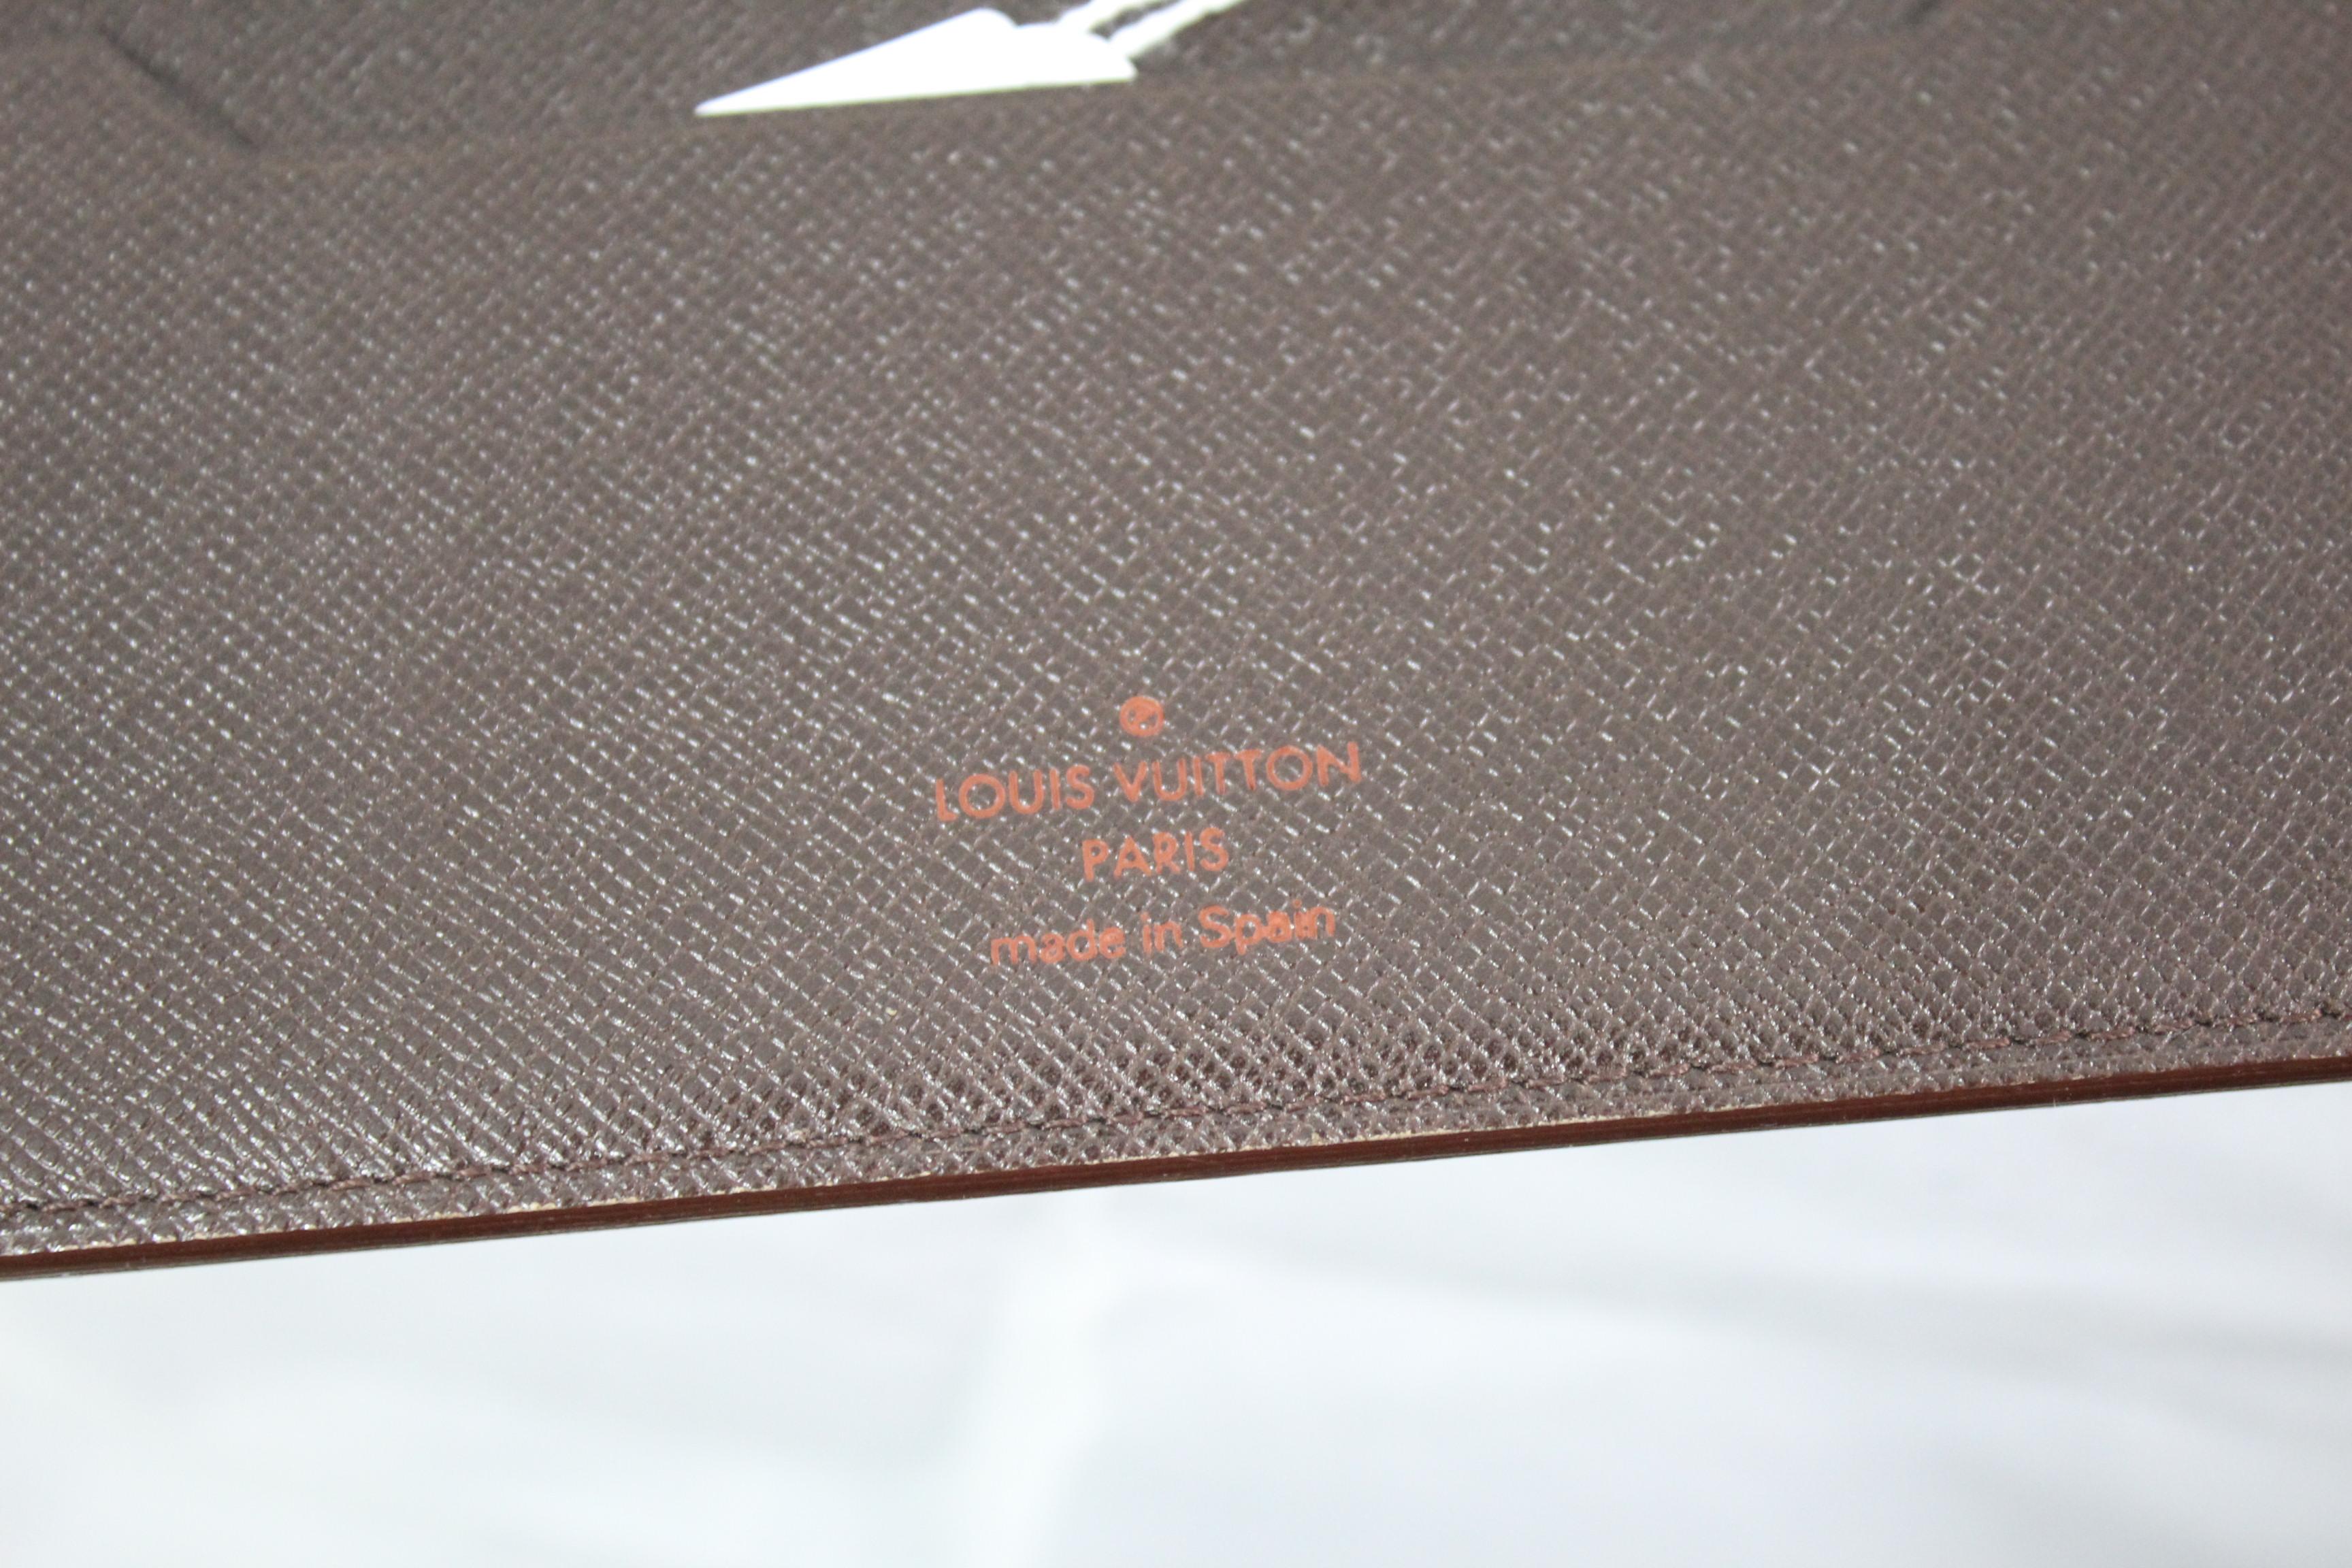 Louis Vuitotn damier ebene agenda / notebook cover GM 

Size 22.5x18 cm